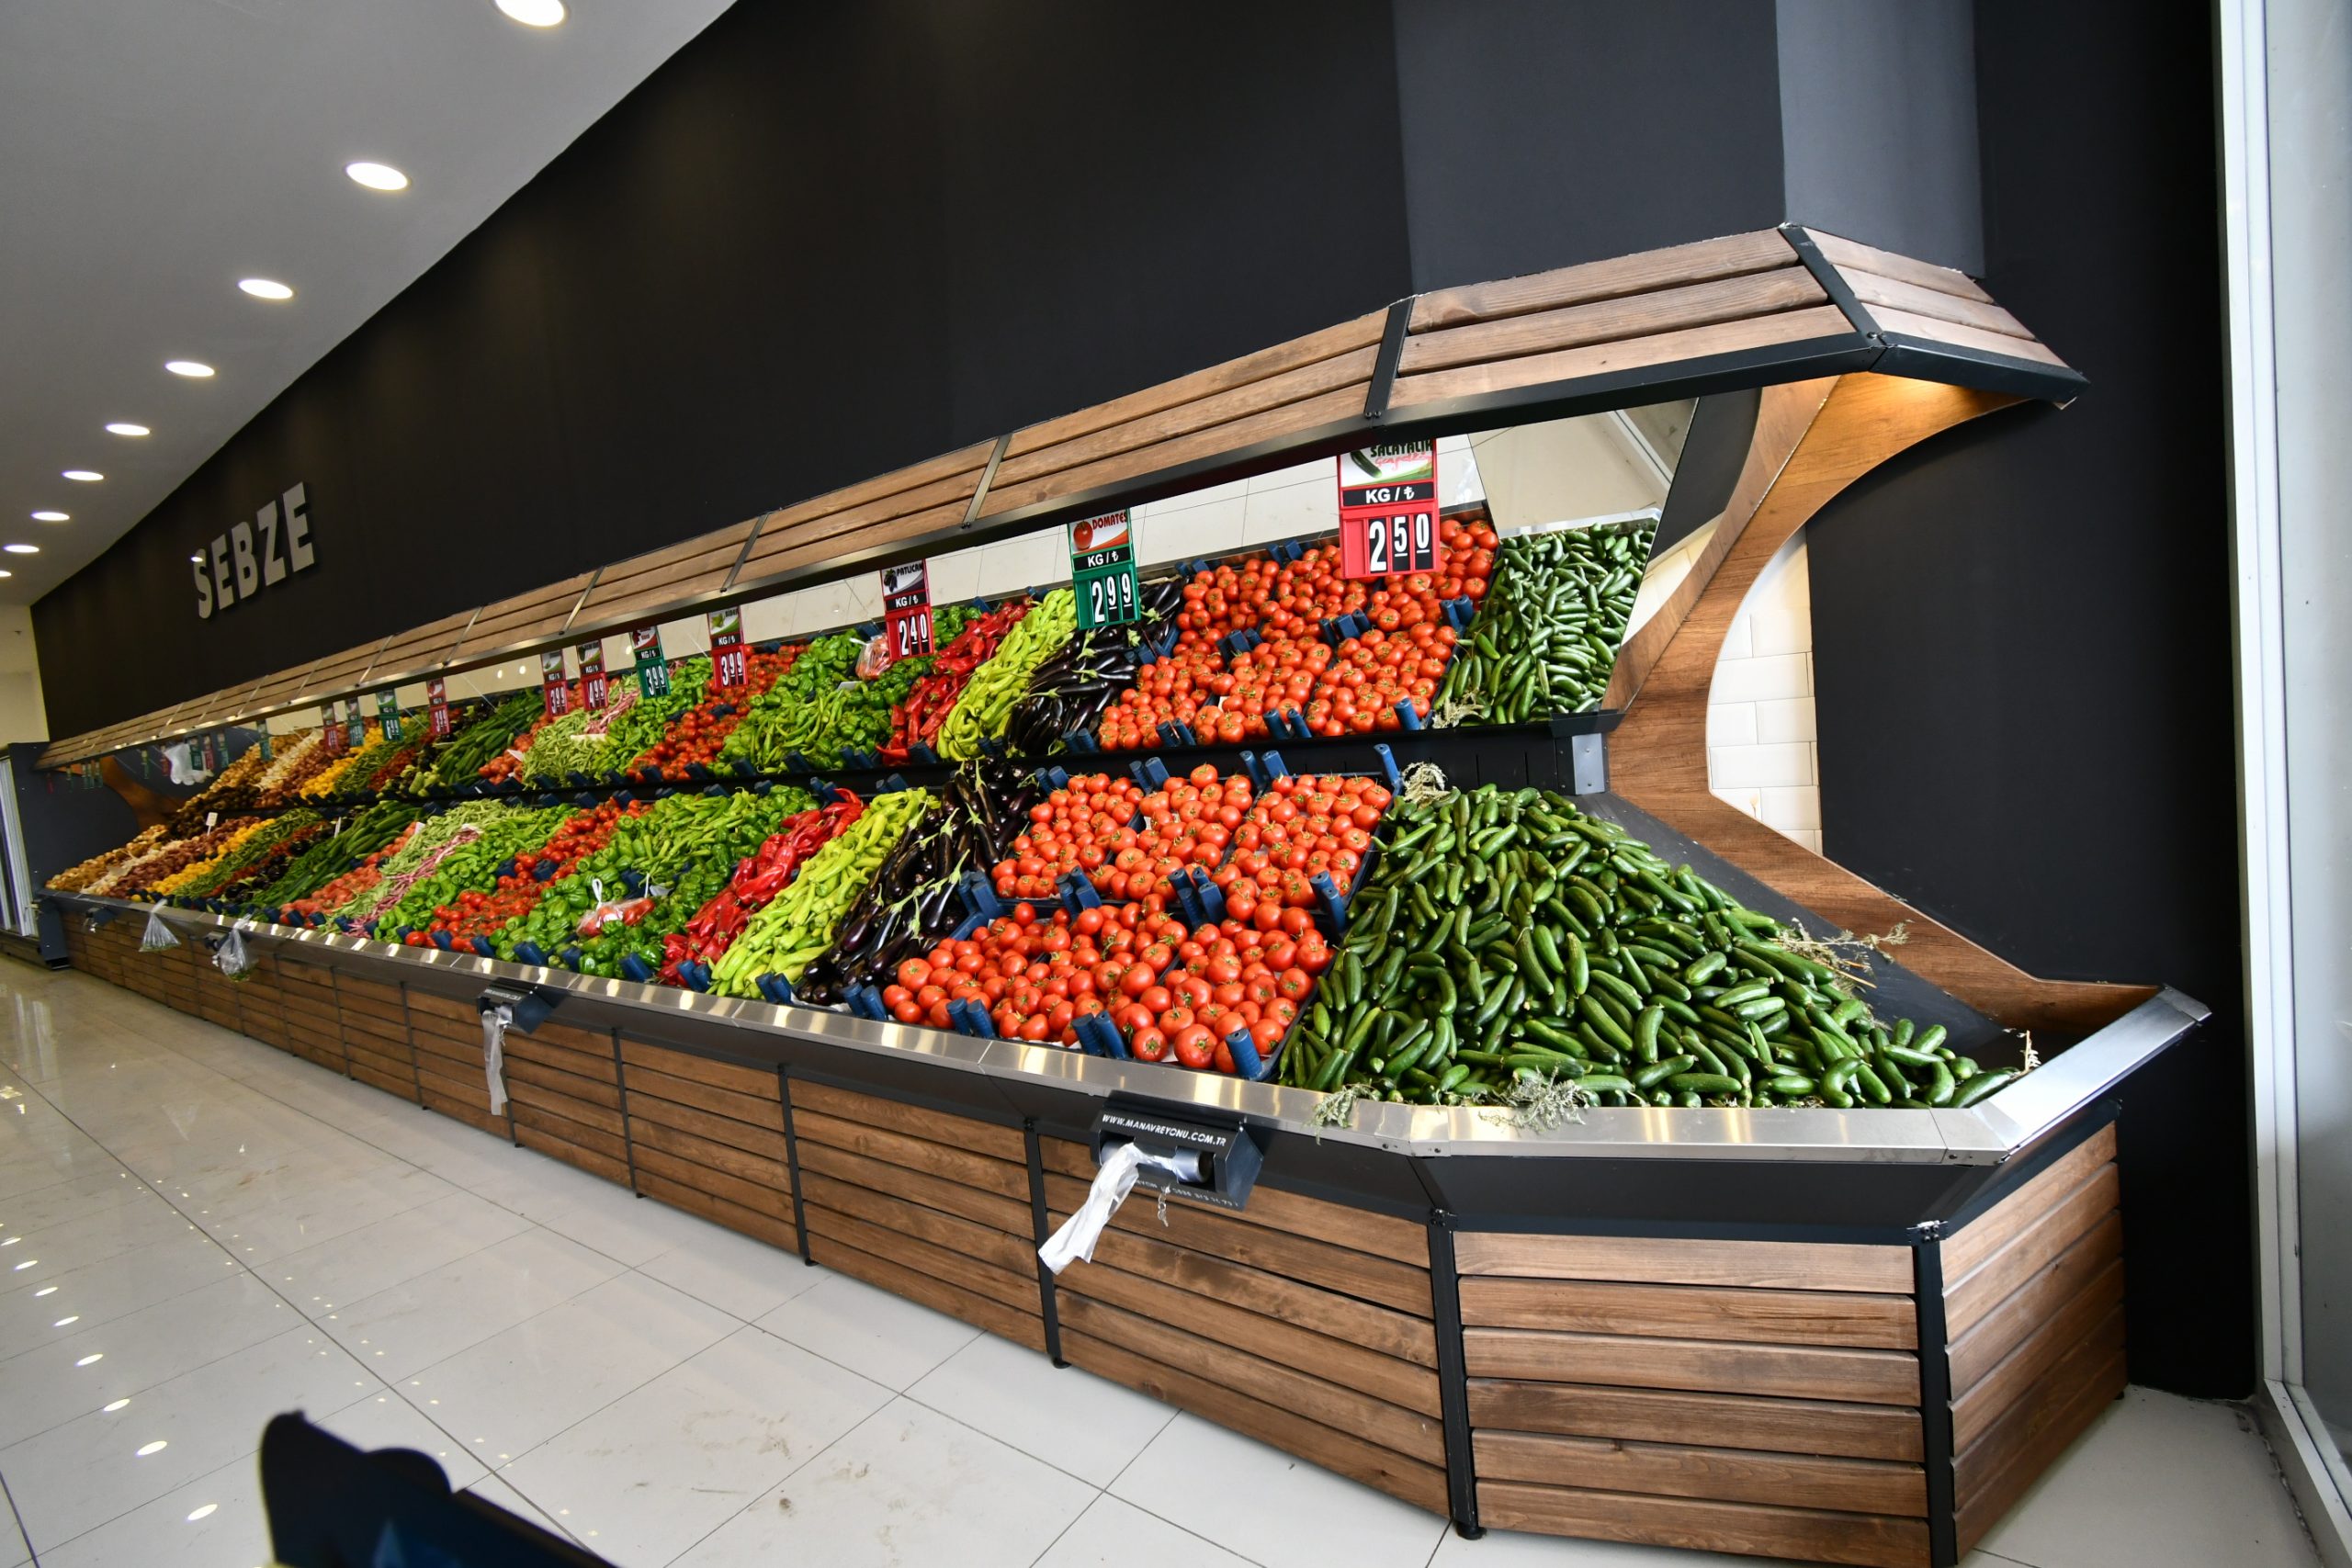 Bachelor vegetable store. Manav. Greengrocer в торговом центре. Manav Countertops. Post Design Fruit.